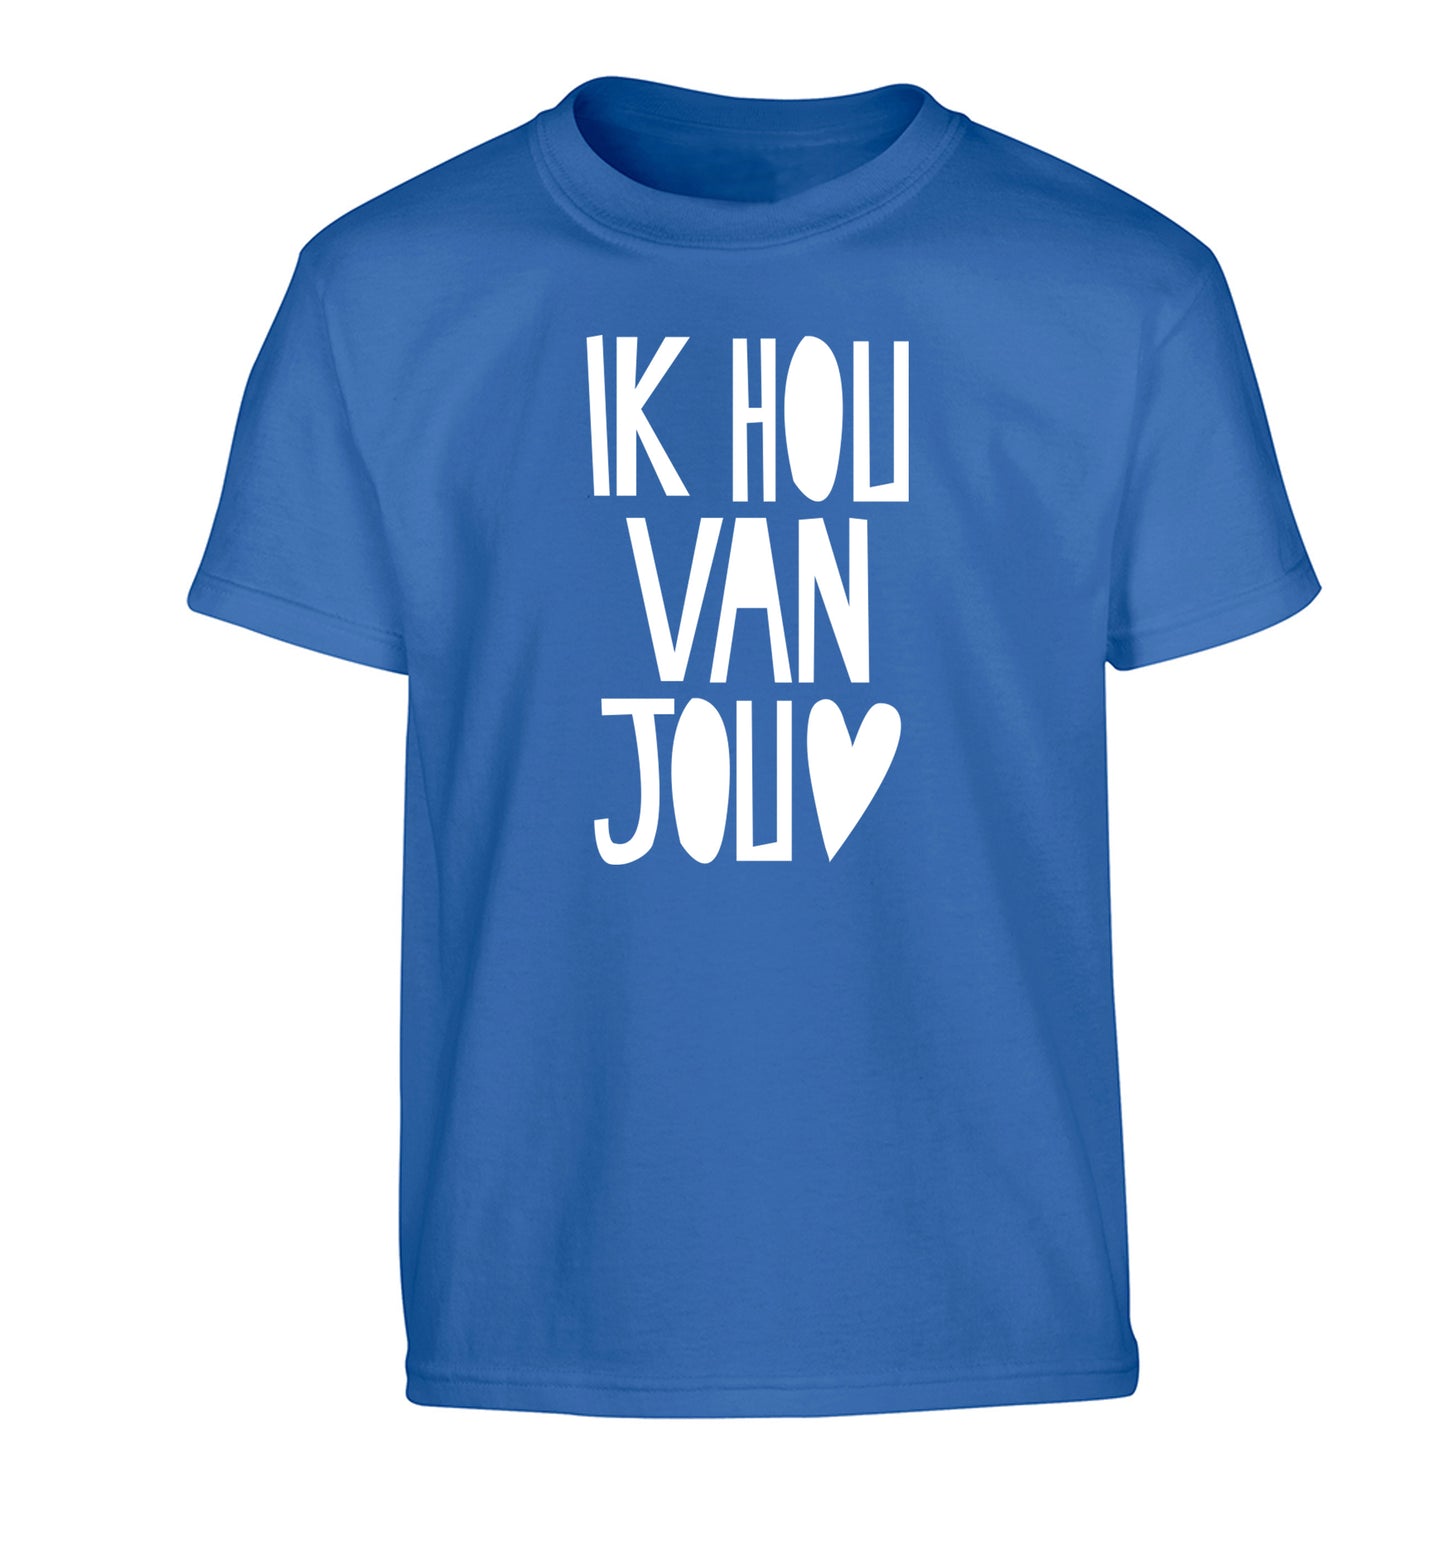 Ik Hau Van Jou - I love you Children's blue Tshirt 12-13 Years